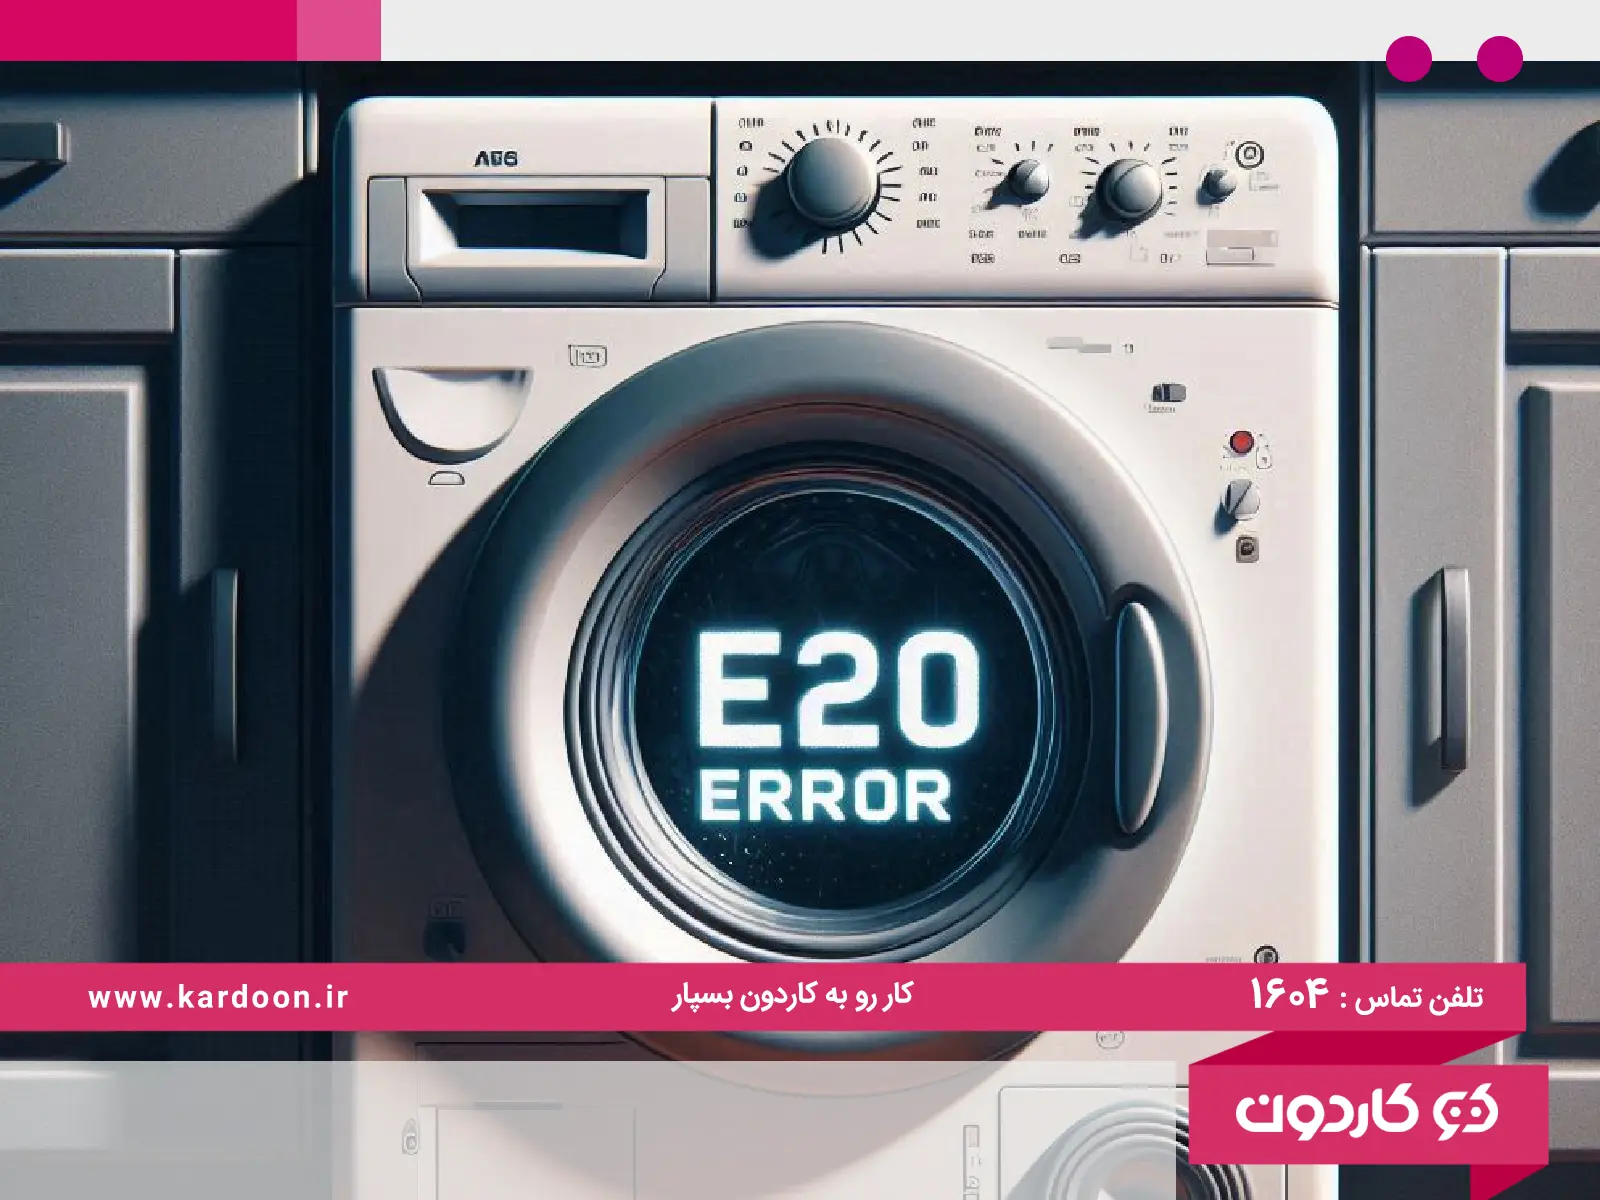 Error E20 in AEG washing machine